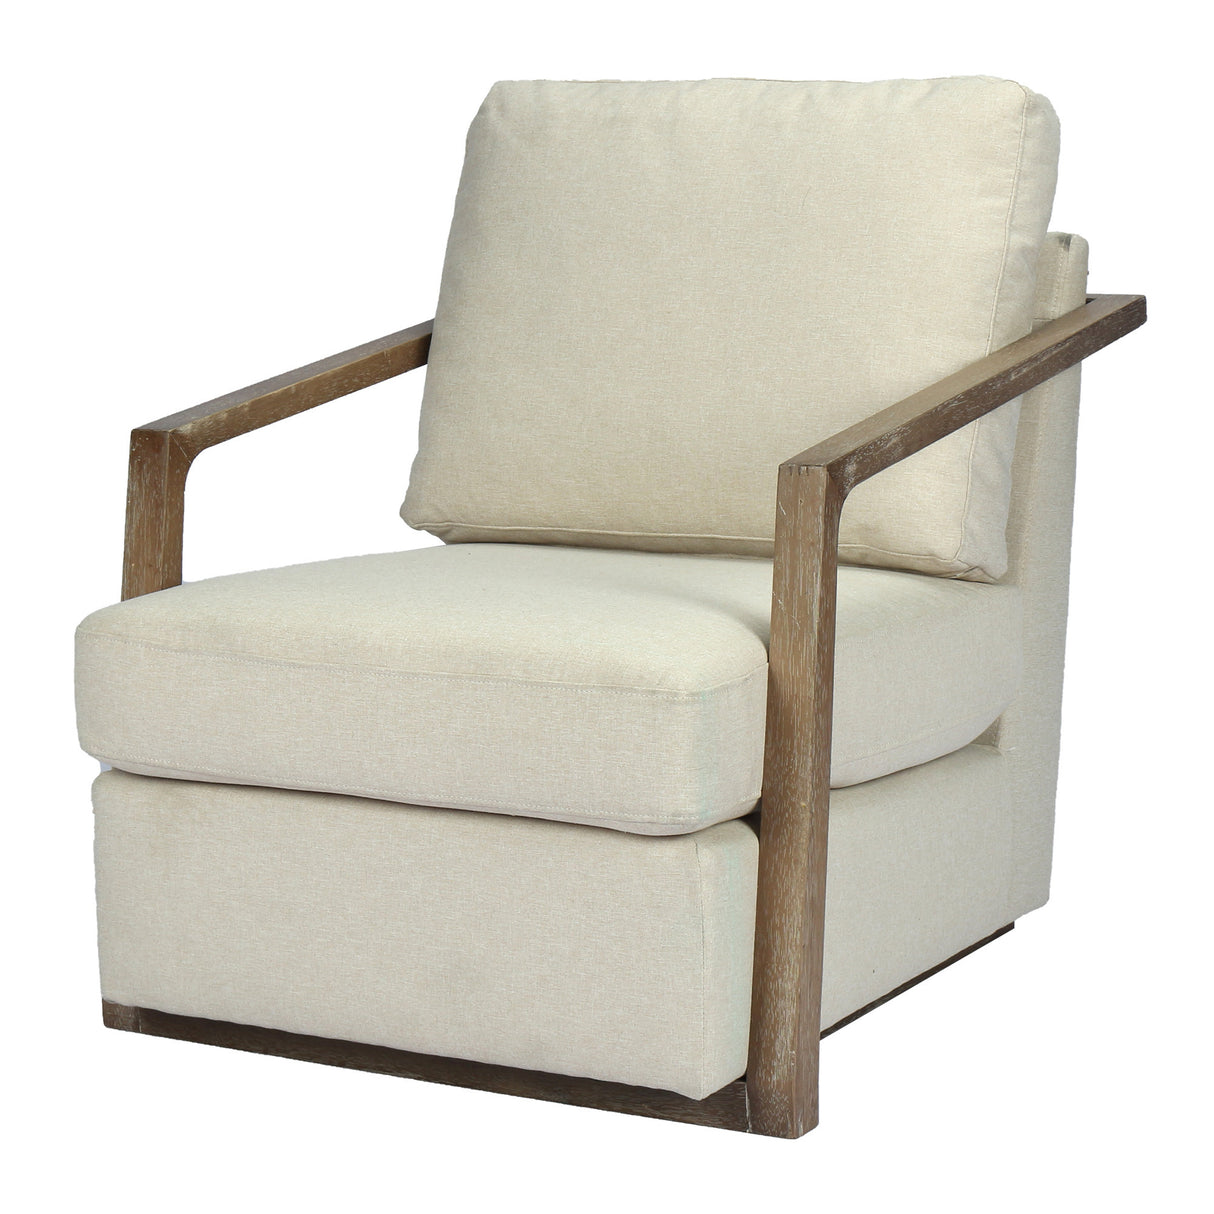 modern design furniture california style armchair lounge chair wooden cushion accent chair - Home Elegance USA